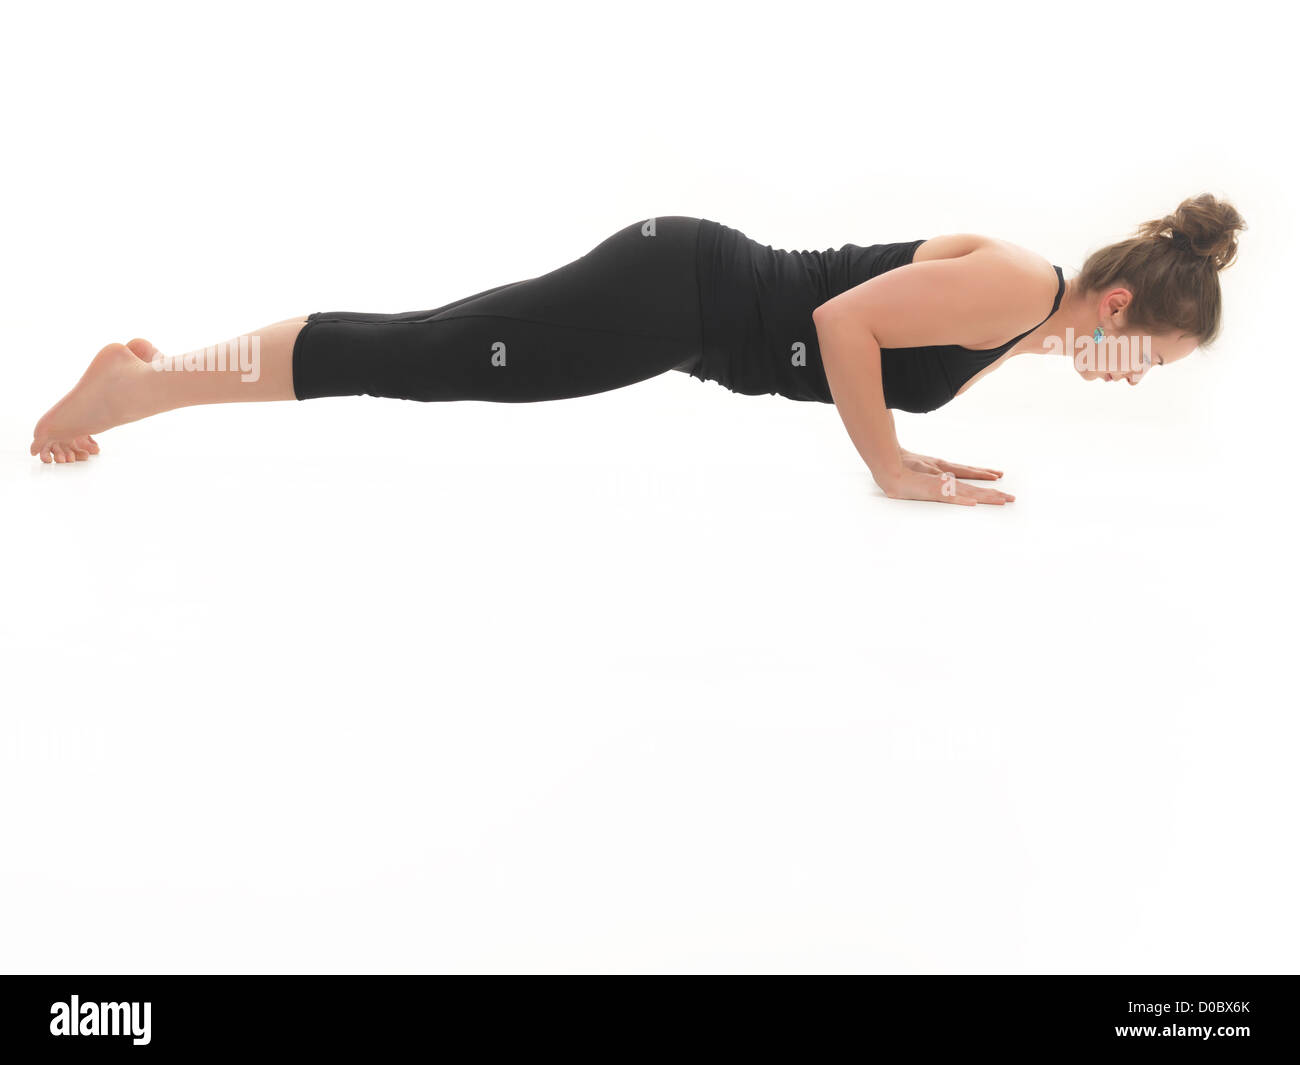 Advanced Yoga Practitioner Woman in Extreme Yoga Pose Stock Photo - Alamy